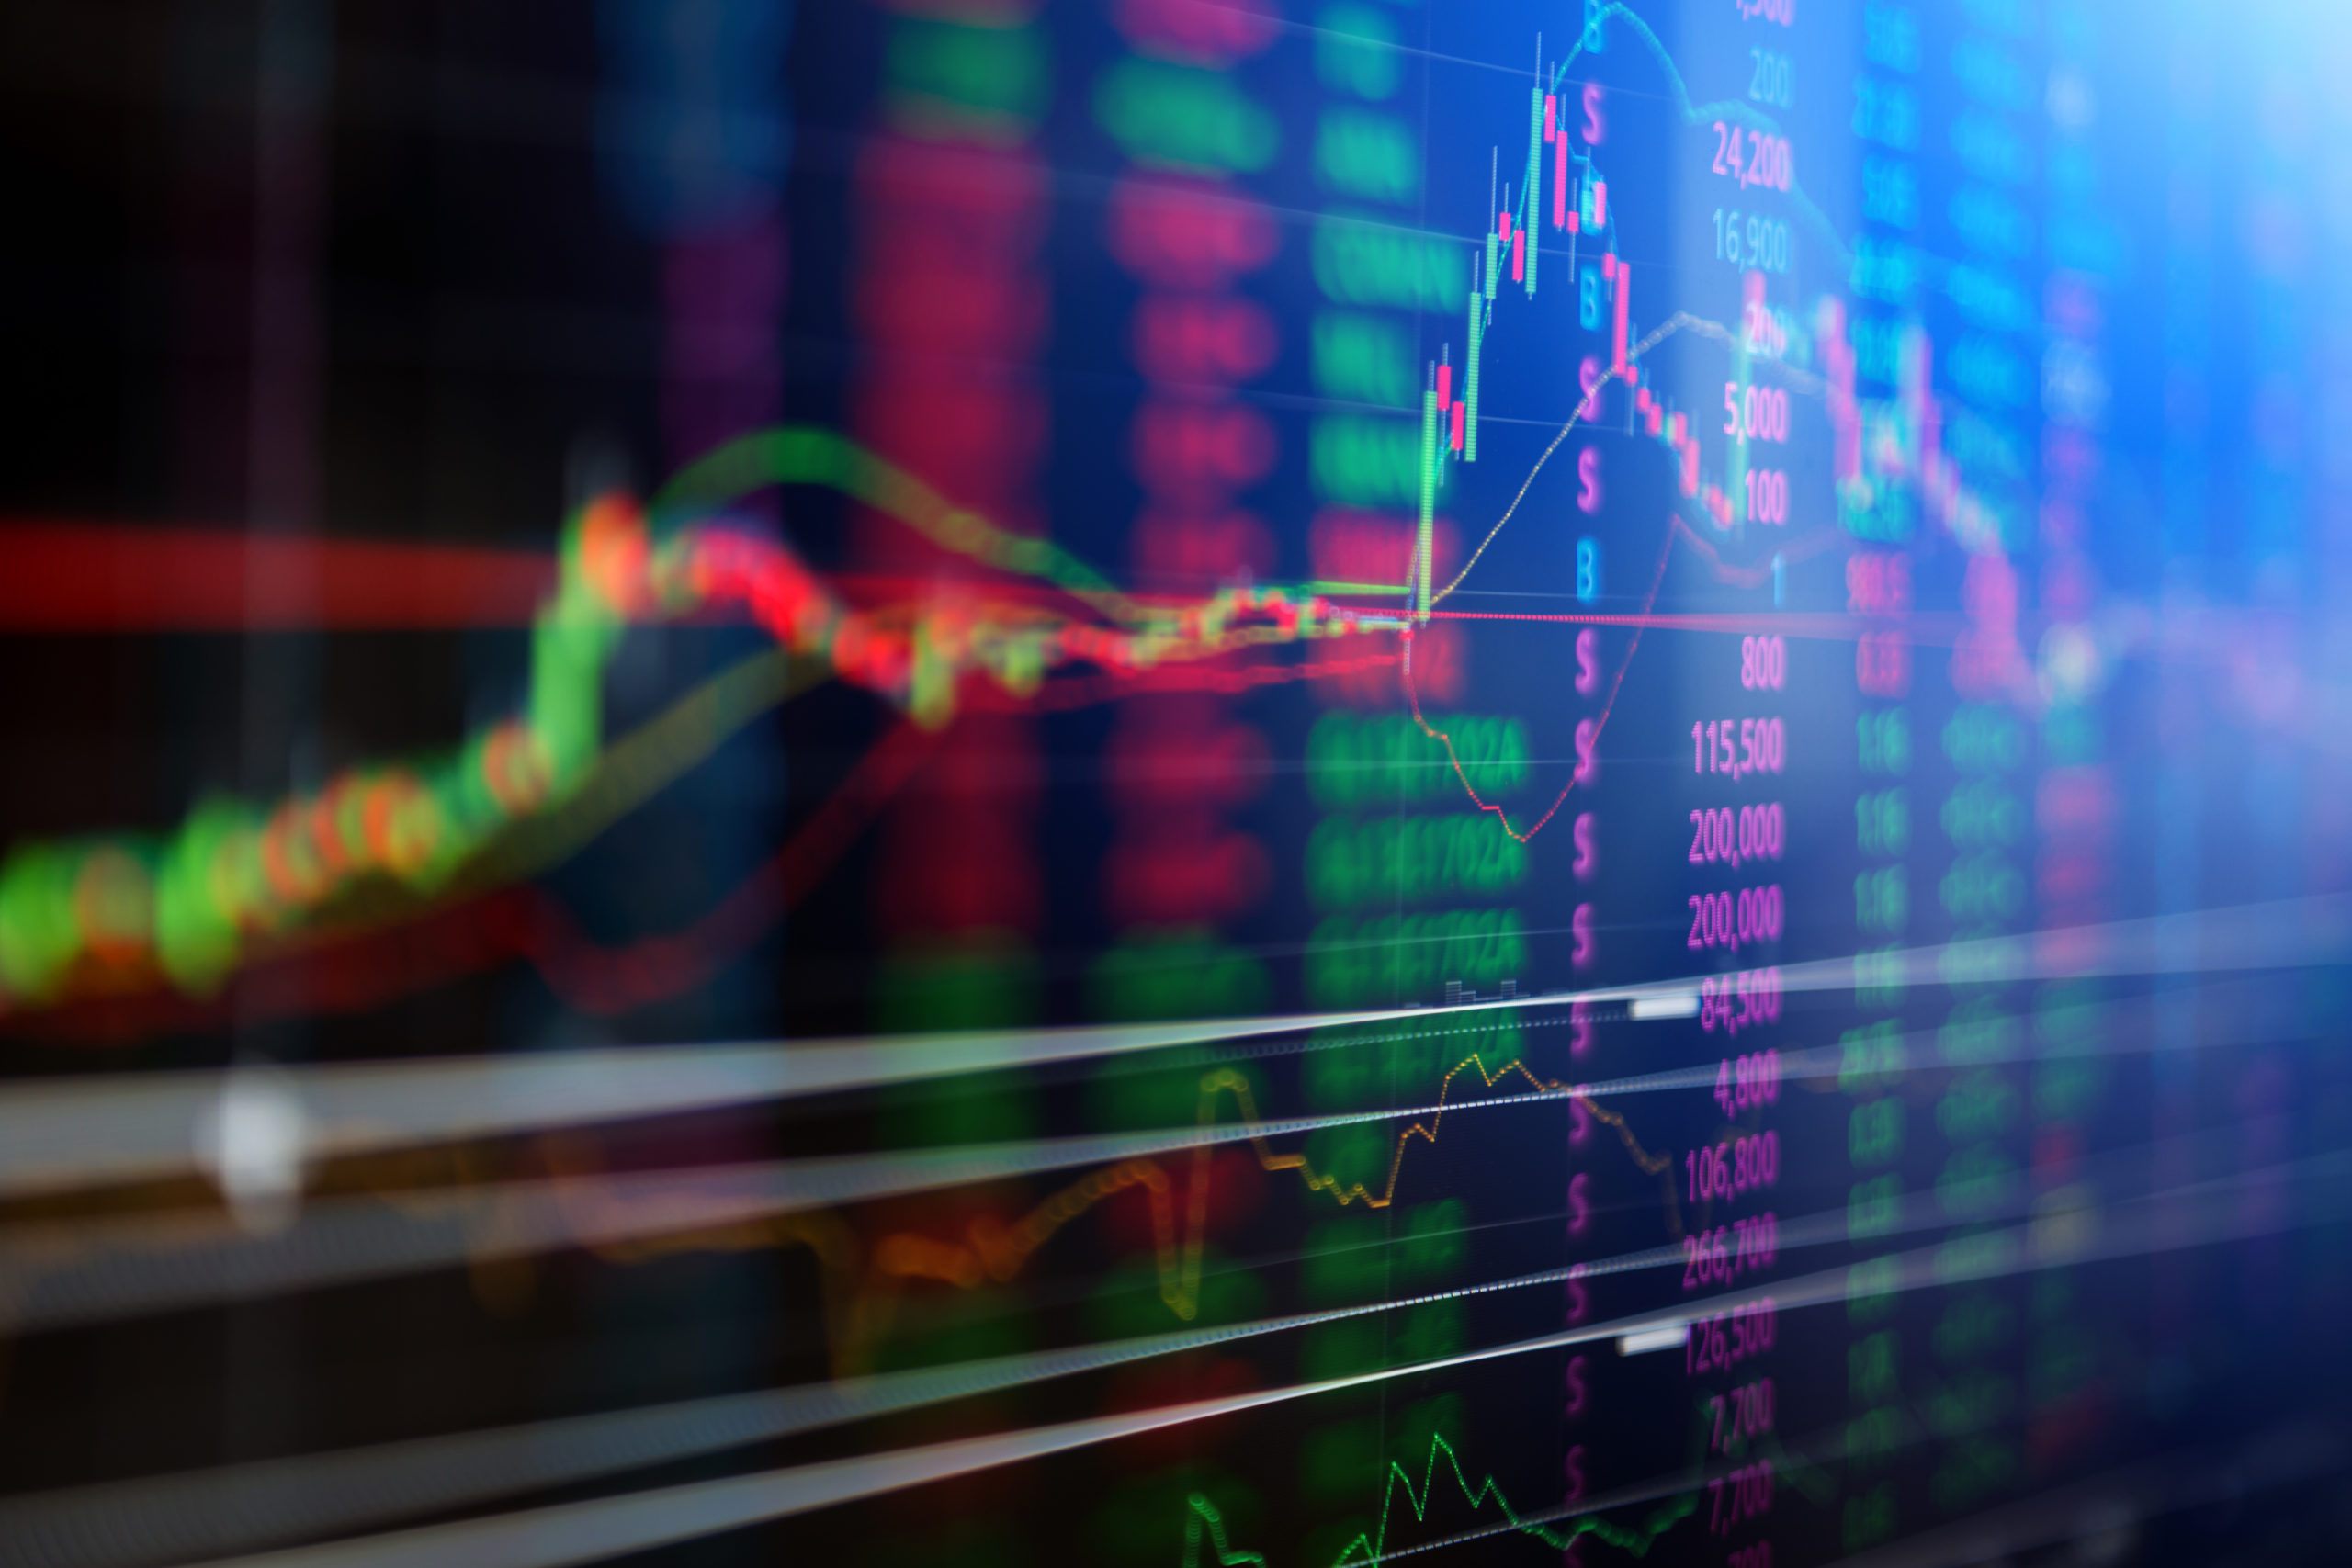 Statistic graph stock market data and finance indicator analysis